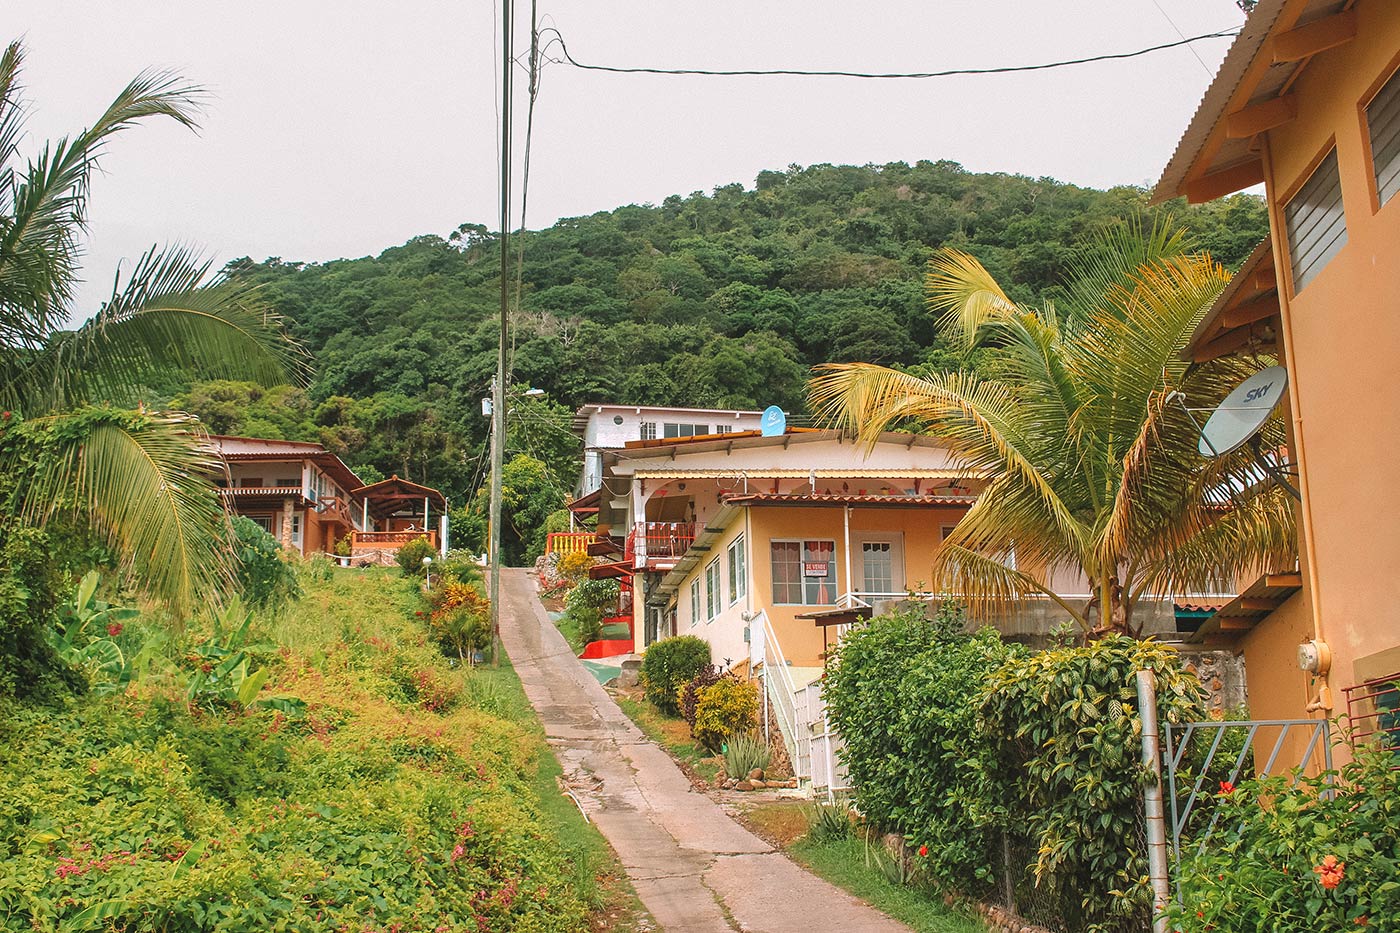 A guide to Taboga Island in Panama City